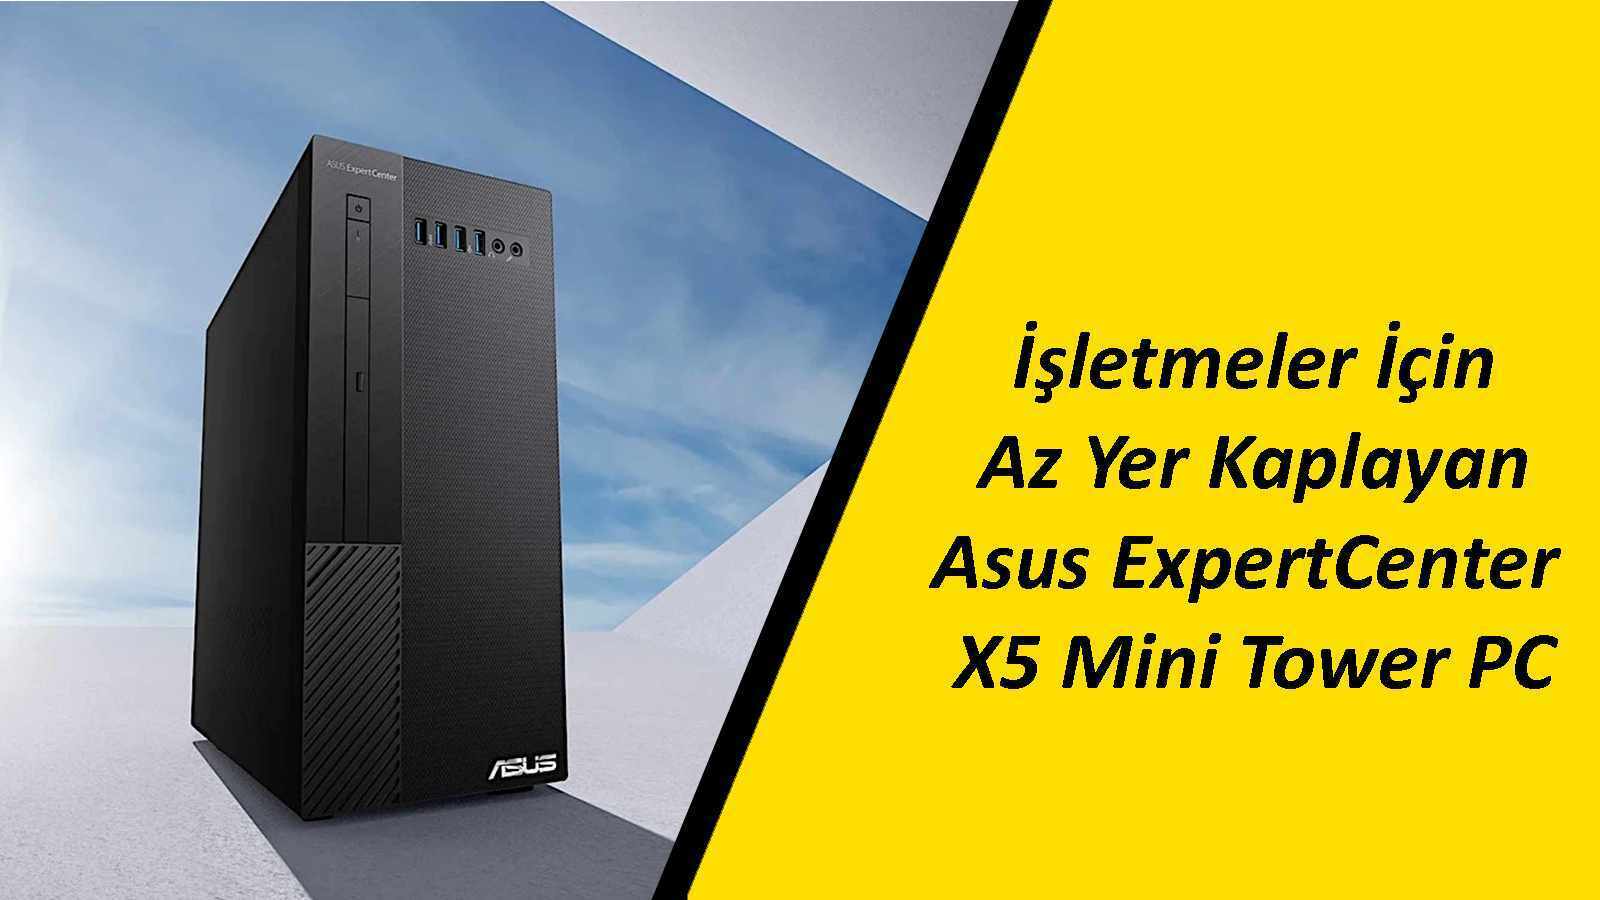 Asus ExpertCenter X5 Mini Tower PC